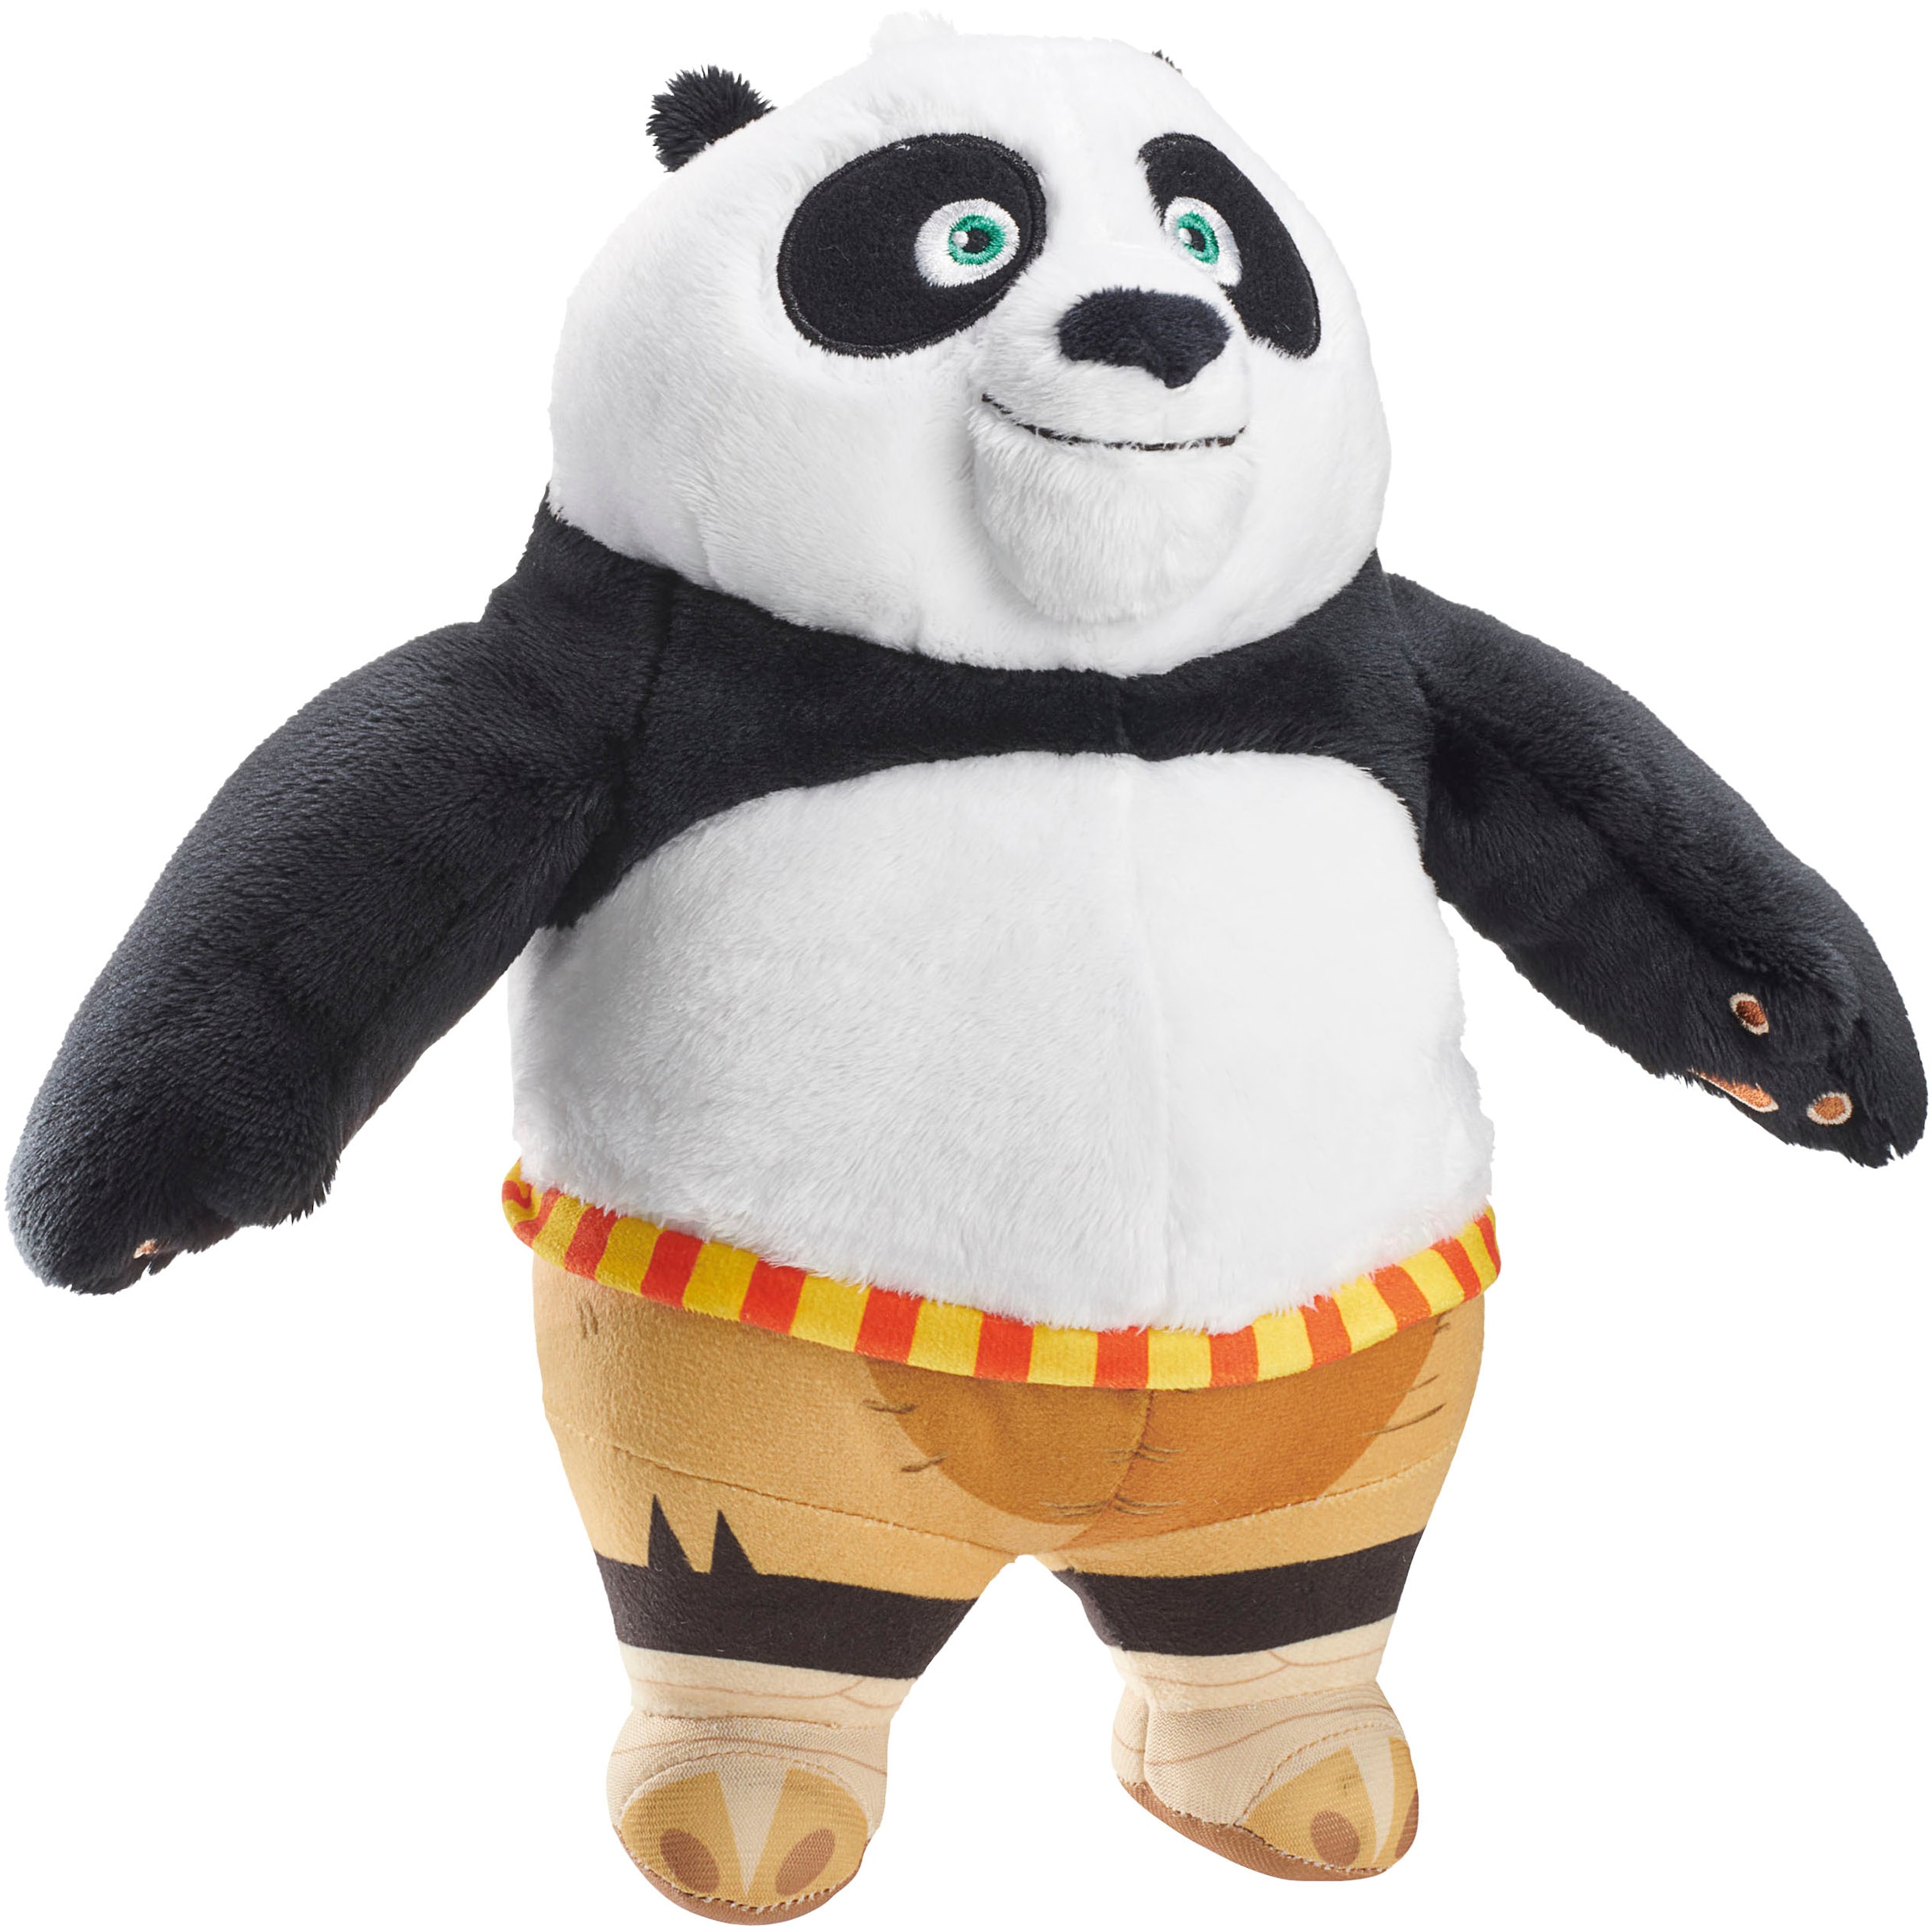 Plüschfigur »Kung Fu Panda, Po, 25 cm«